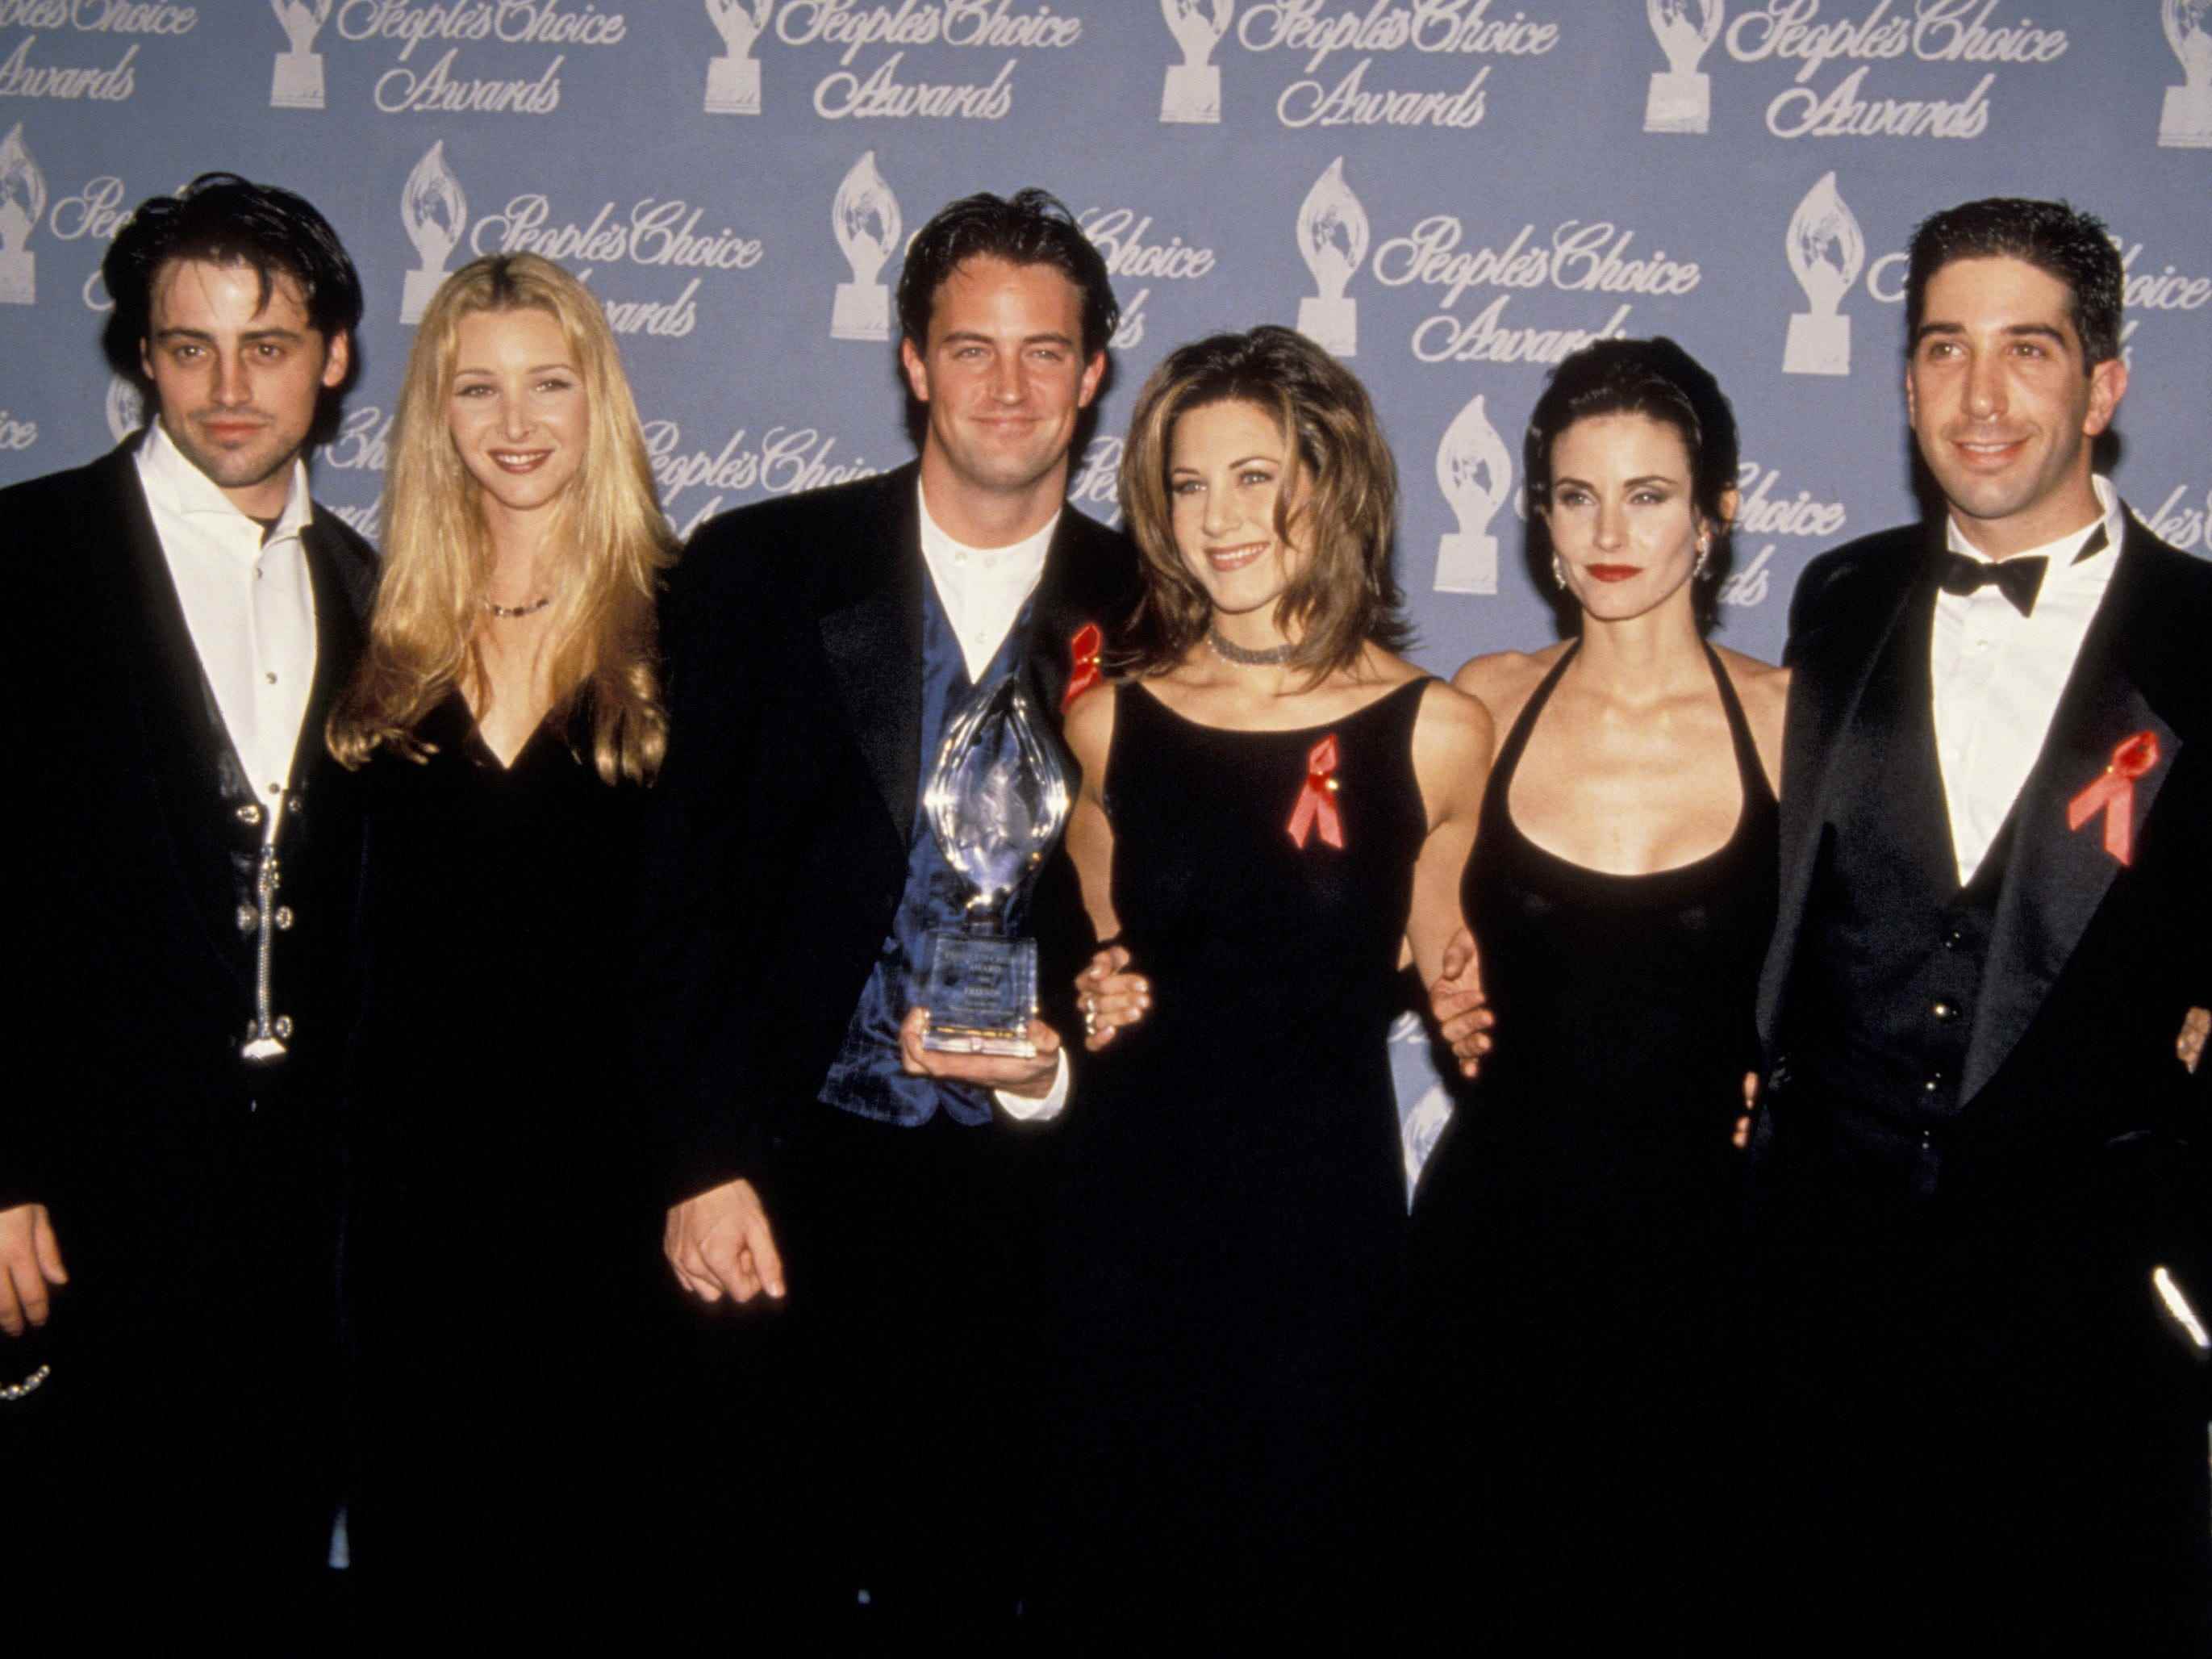 Matt LeBlanc, Lisa Kudrow, Matthew Perry, Jennifer Aniston, Courteney Cox und David Schwimmer bei den People's Choice Awards 1995.